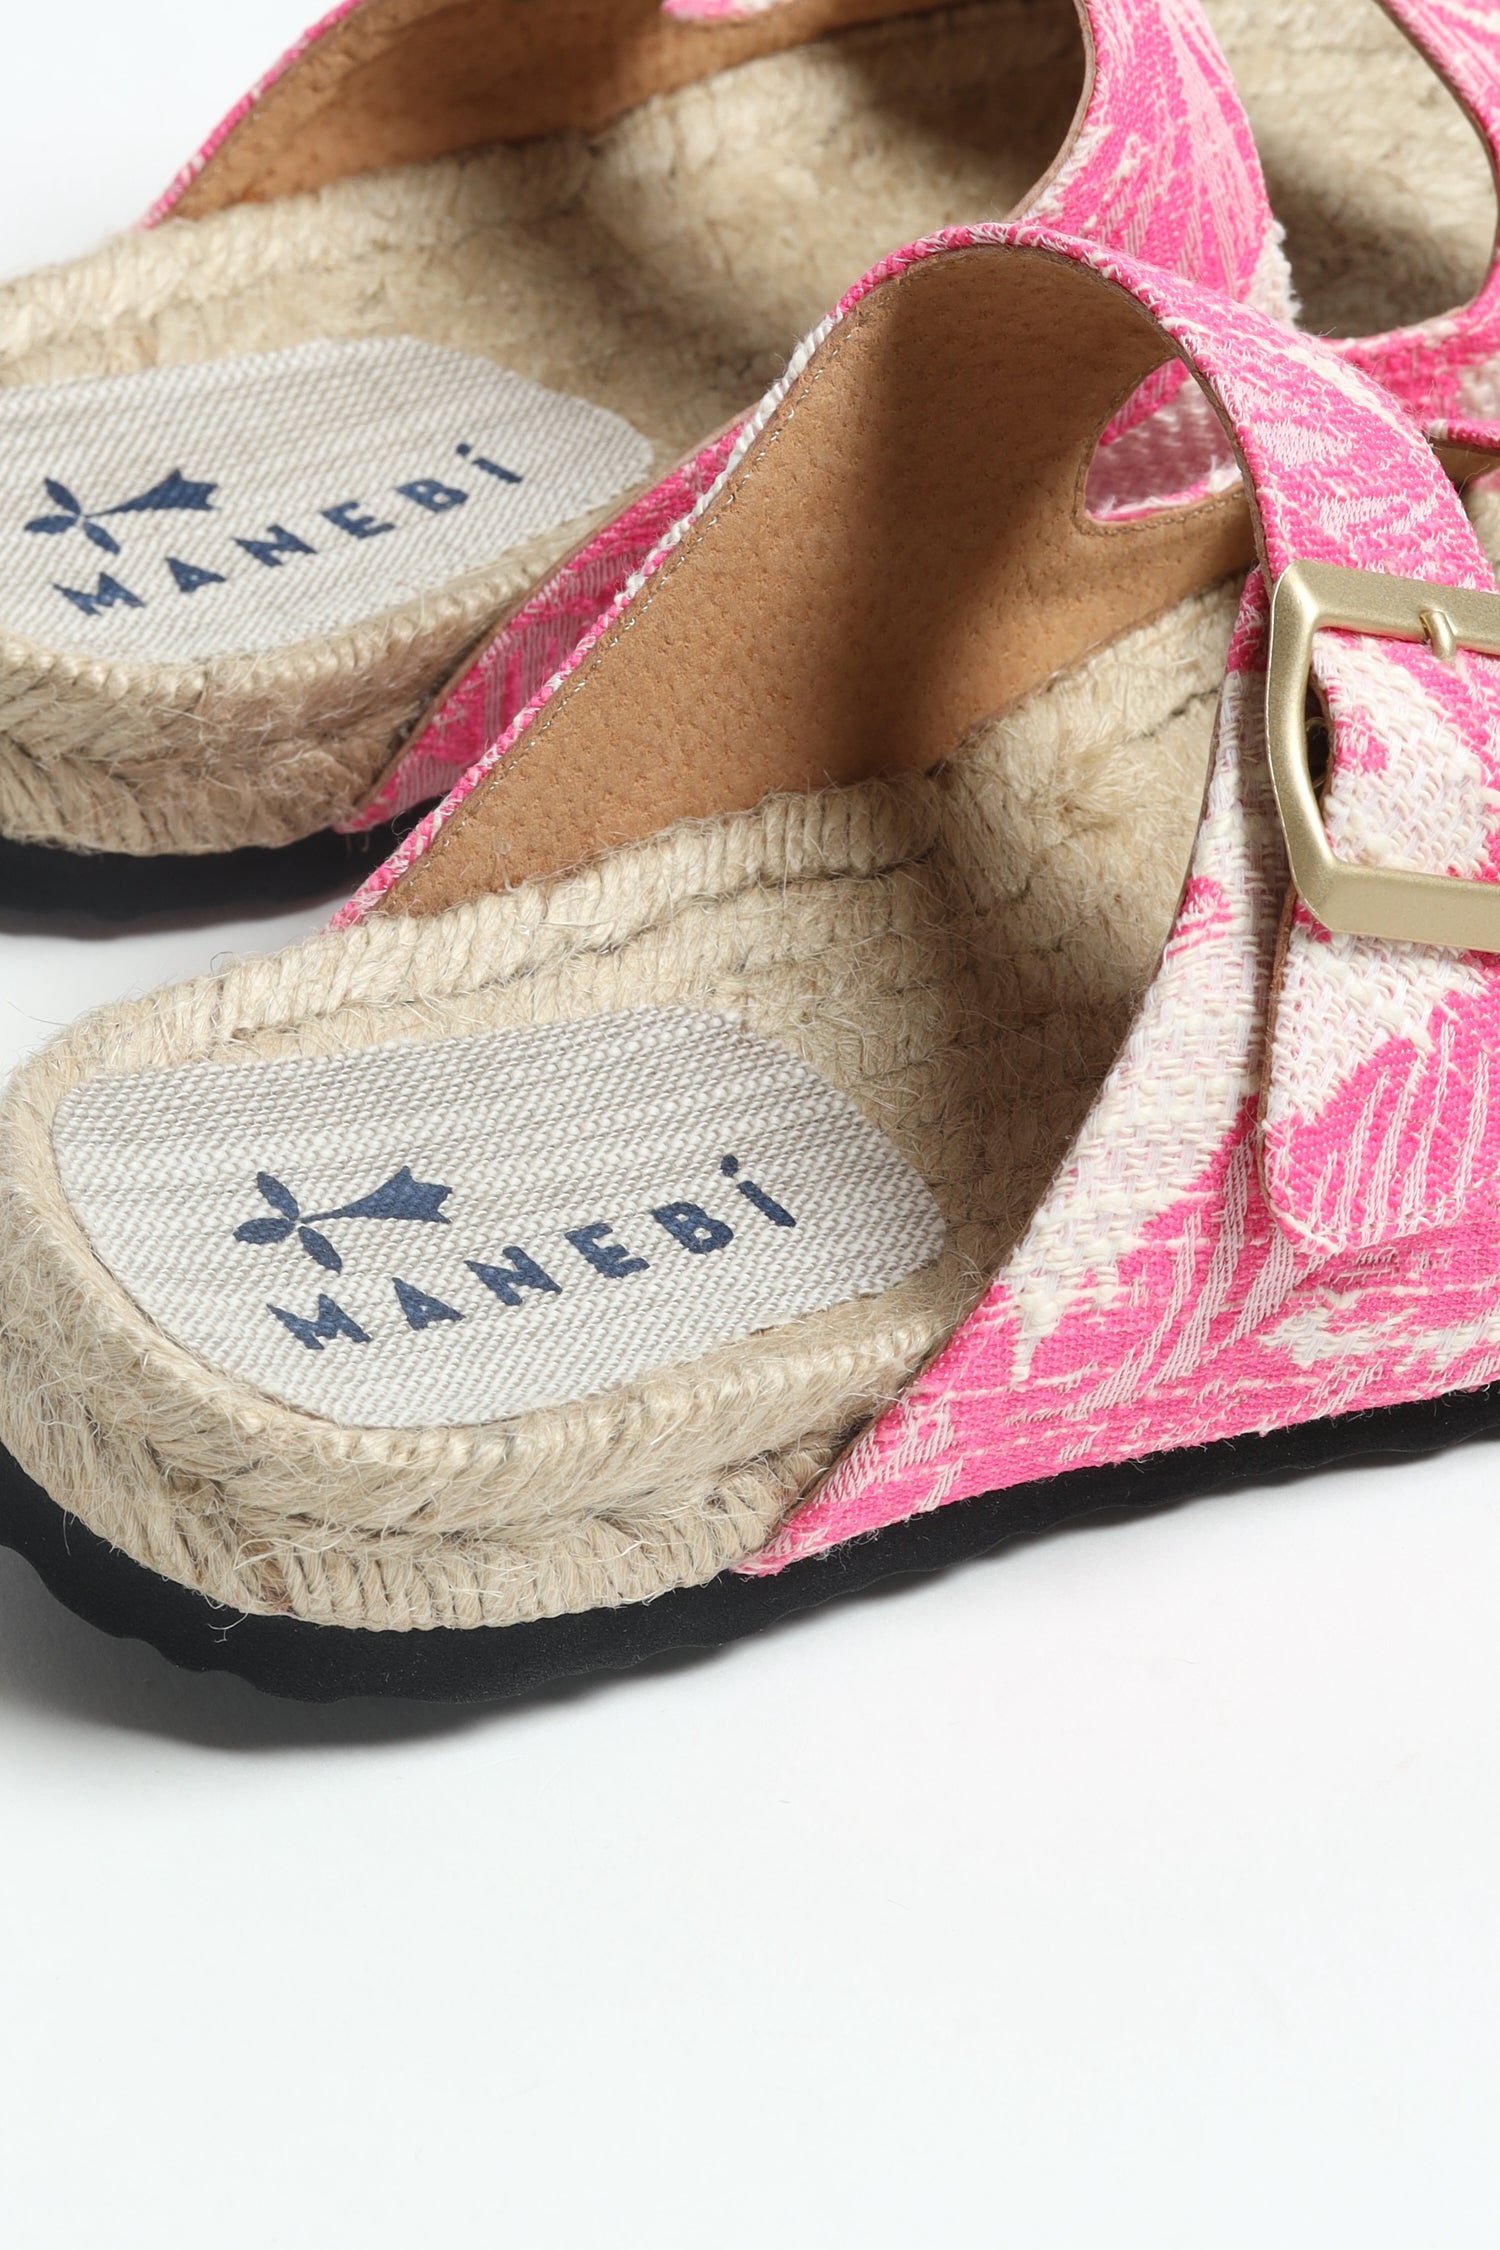 Nordic Sandale in Pink Palms/CreamManebi - Anita Hass